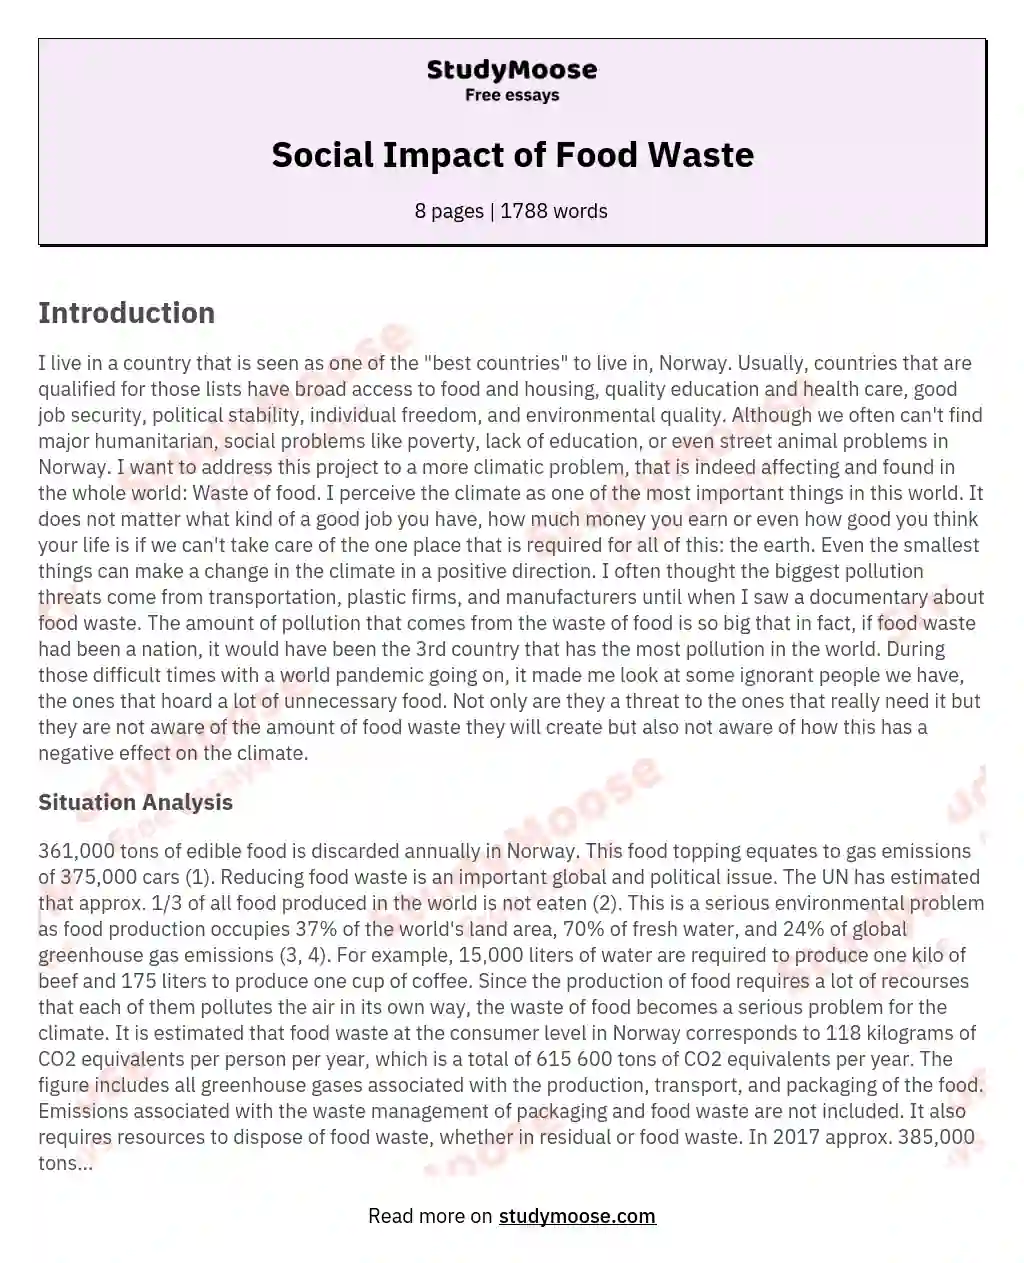 Social Impact of Food Waste essay